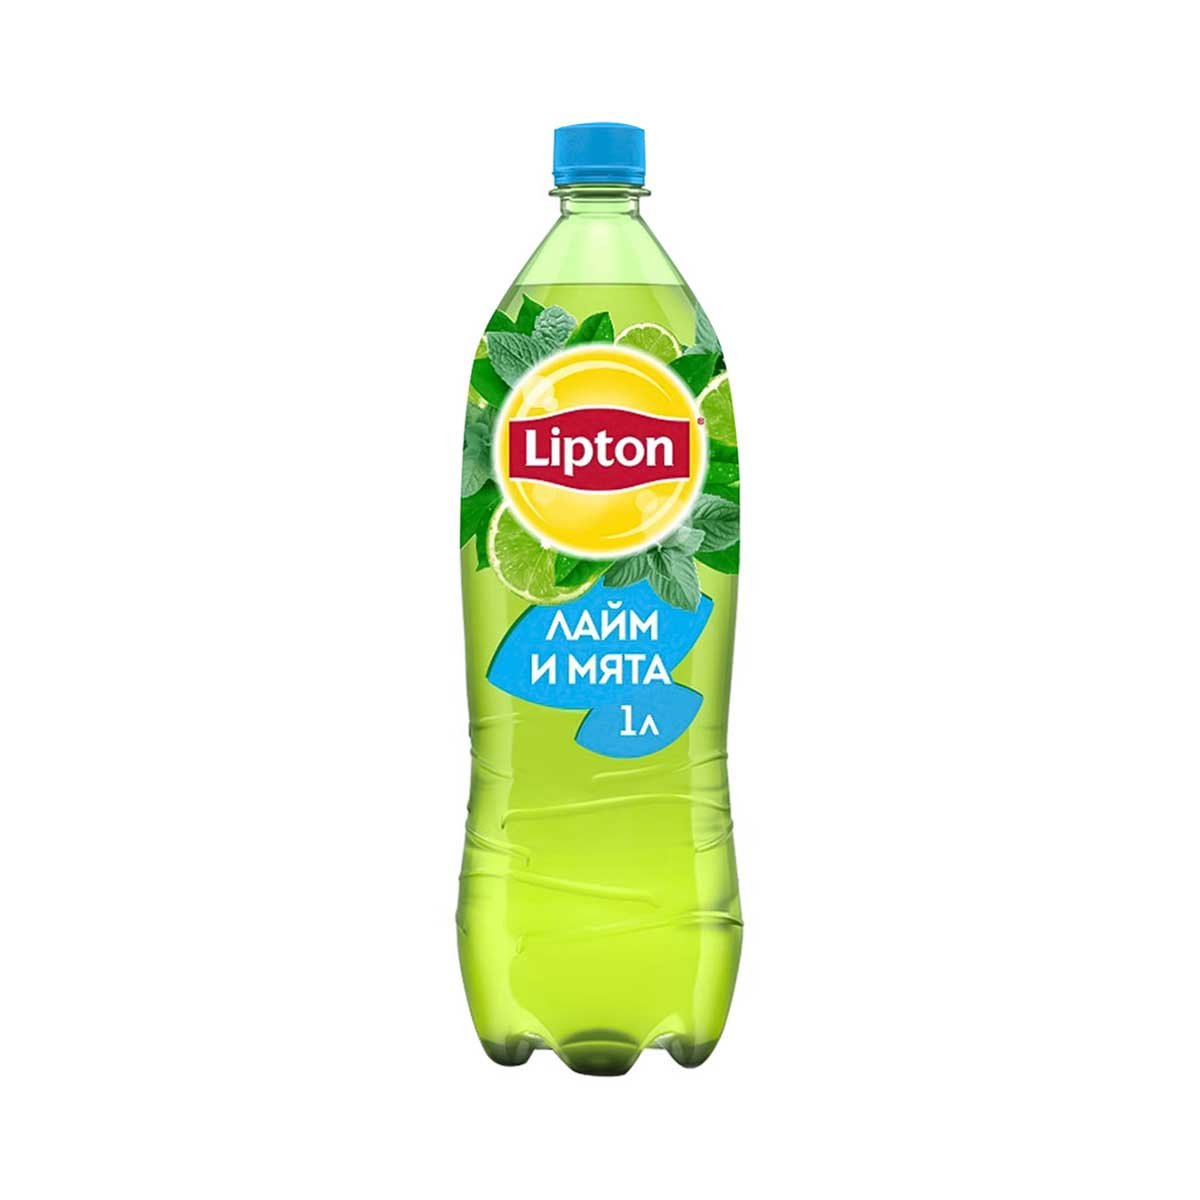 Бутылка зеленого липтона. Липтон зеленый 1л. Липтон зеленый чай 1.5. Липтон зеленый чай 1л. Липтон 2022 1.5л.